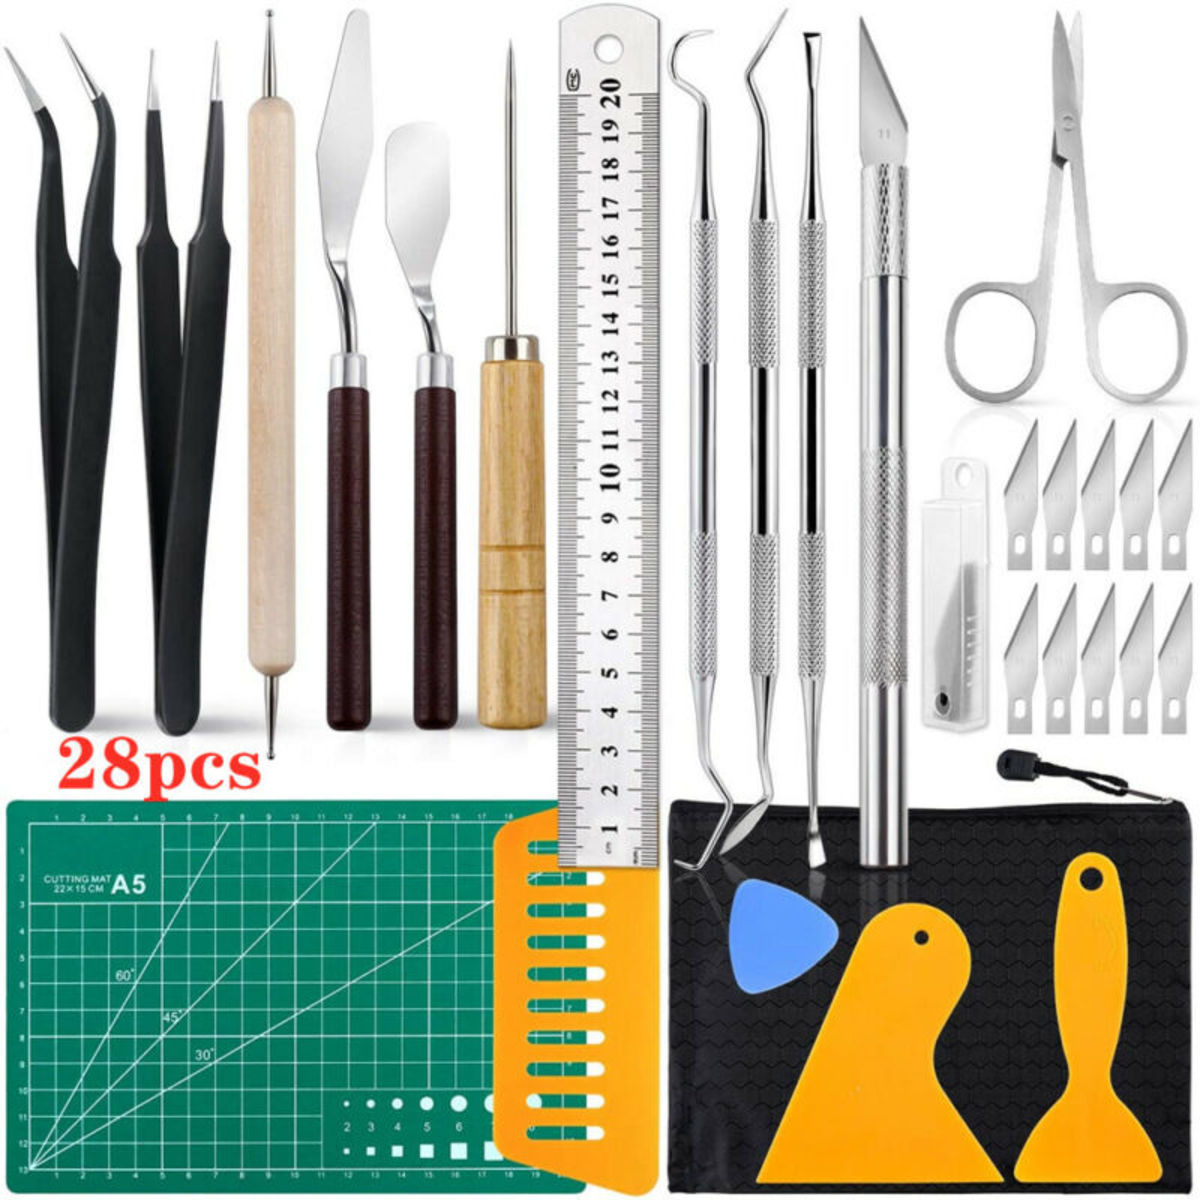 Crafter's Tool Kit Finger Protectors 3/Pkg